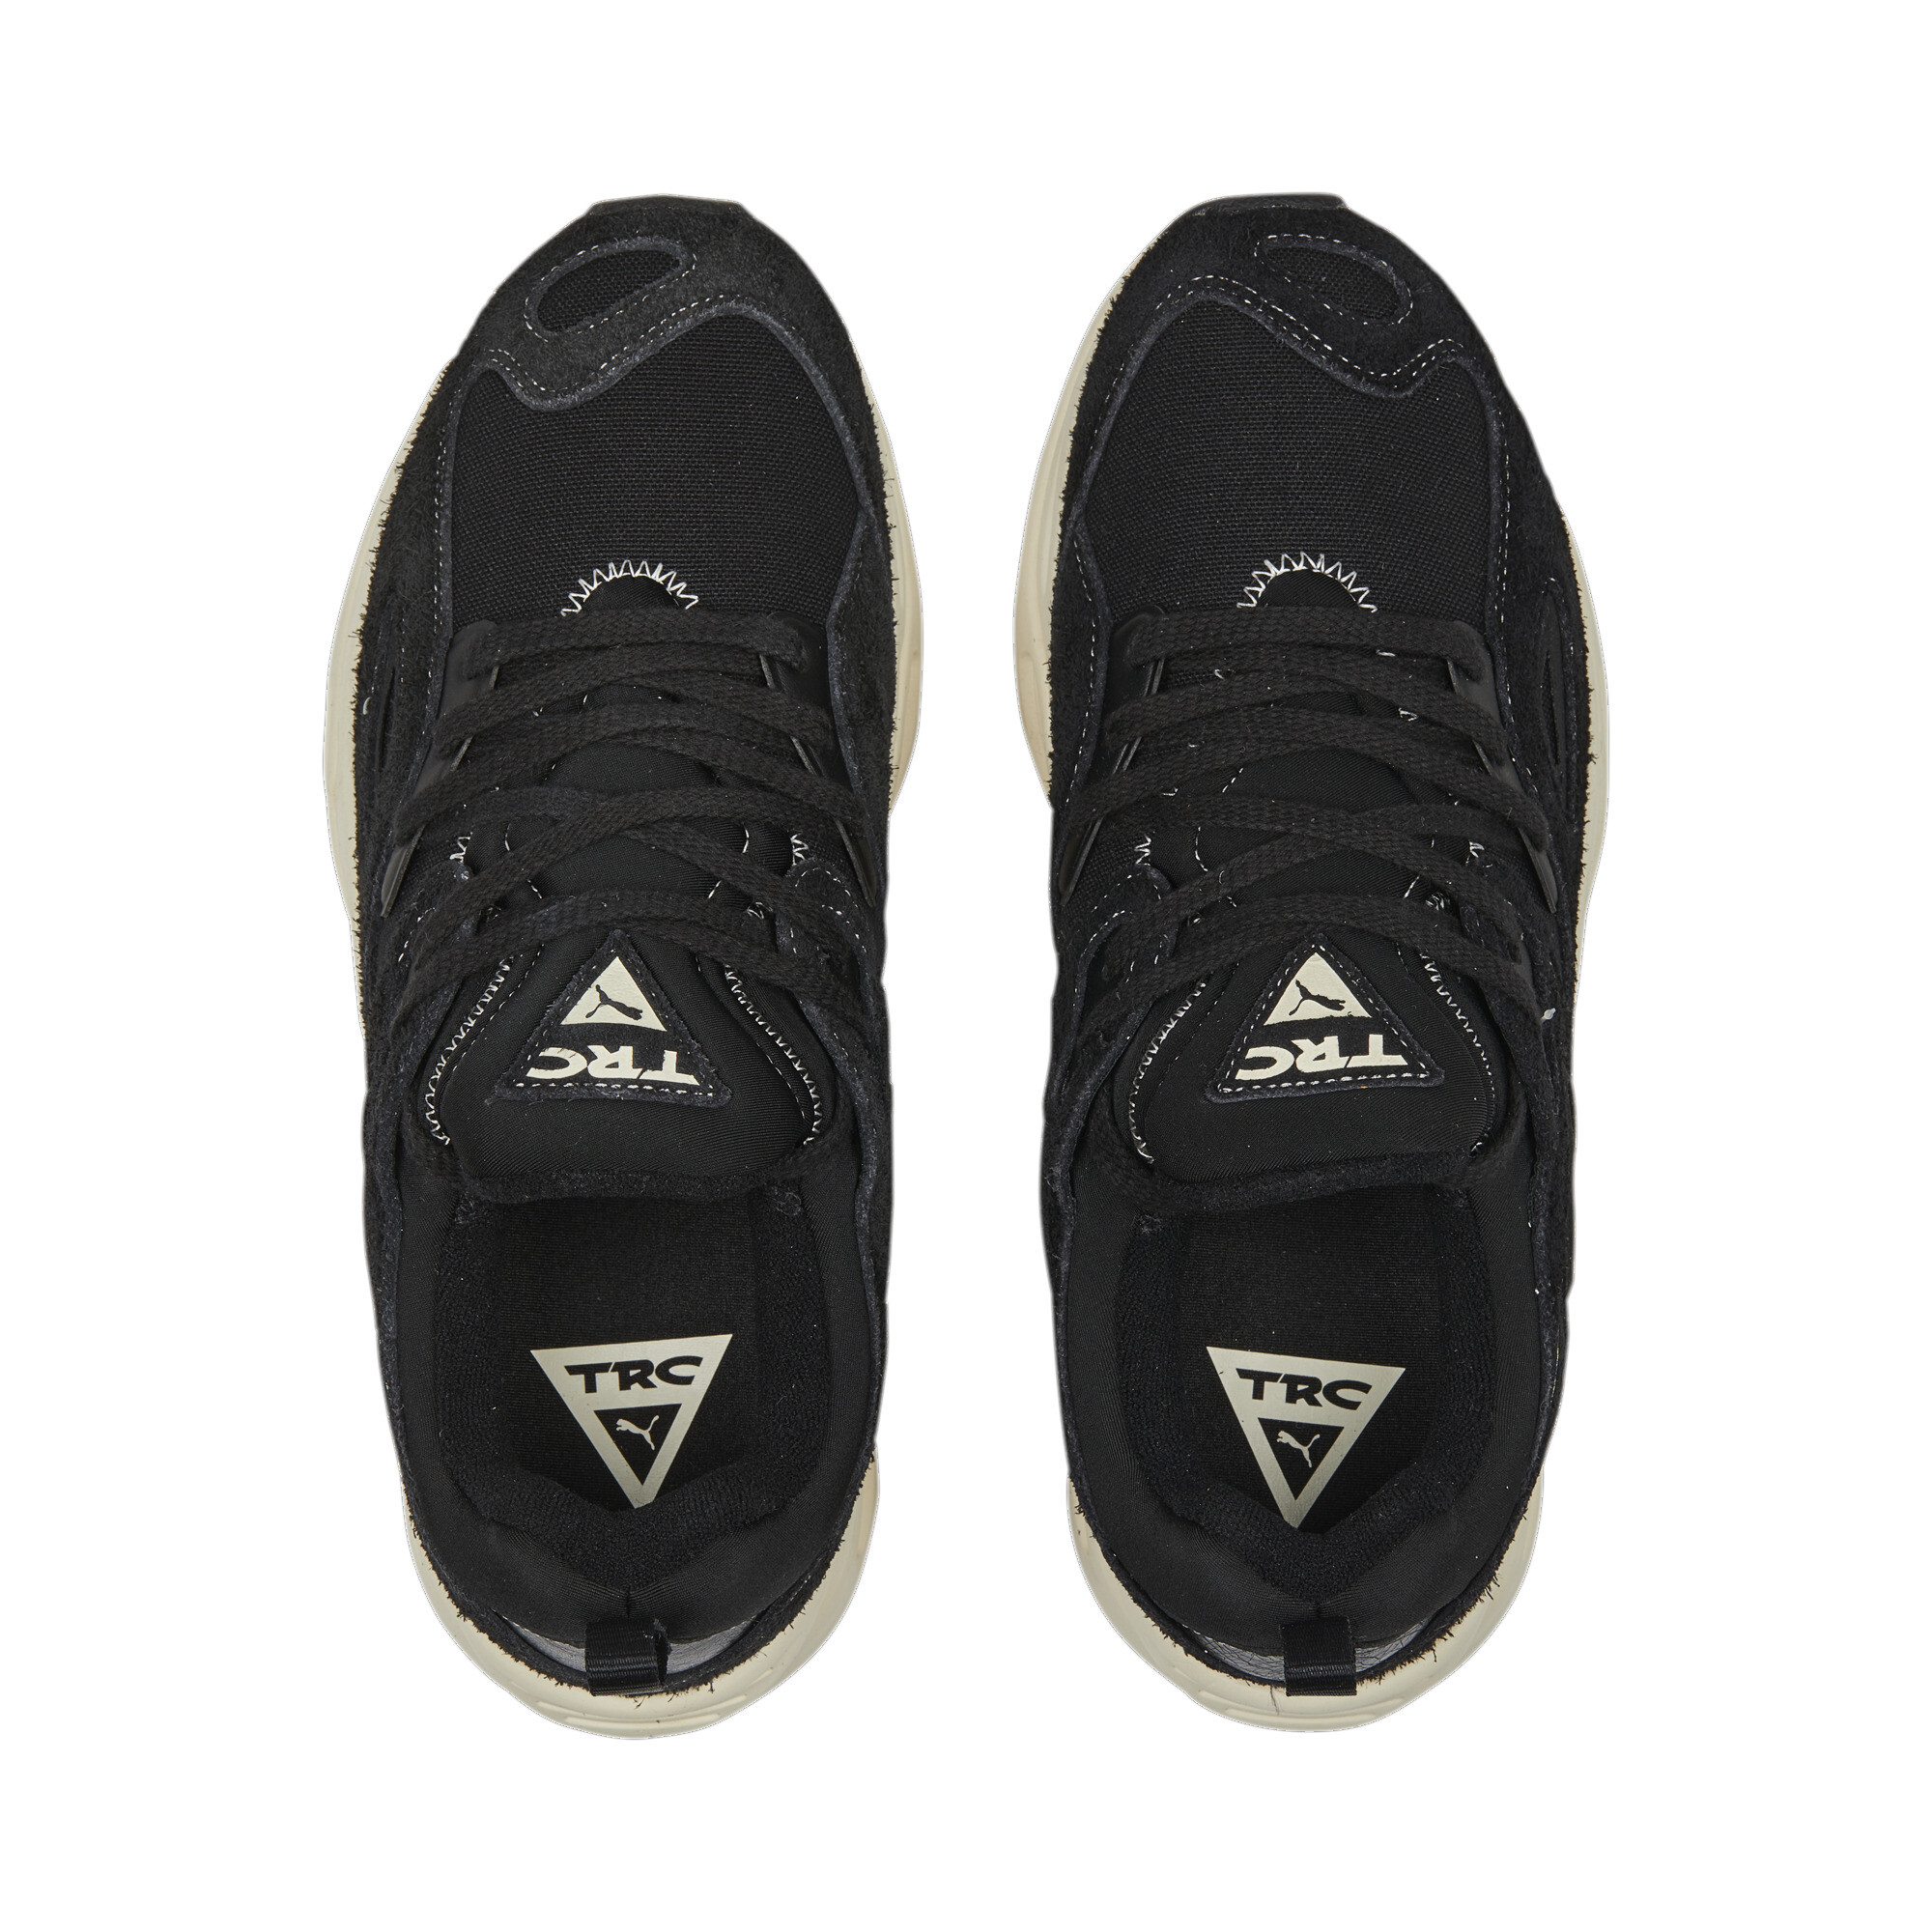 Men's PUMA TRC Blaze Worn Out Sneakers In 10 - Black, Size EU 42